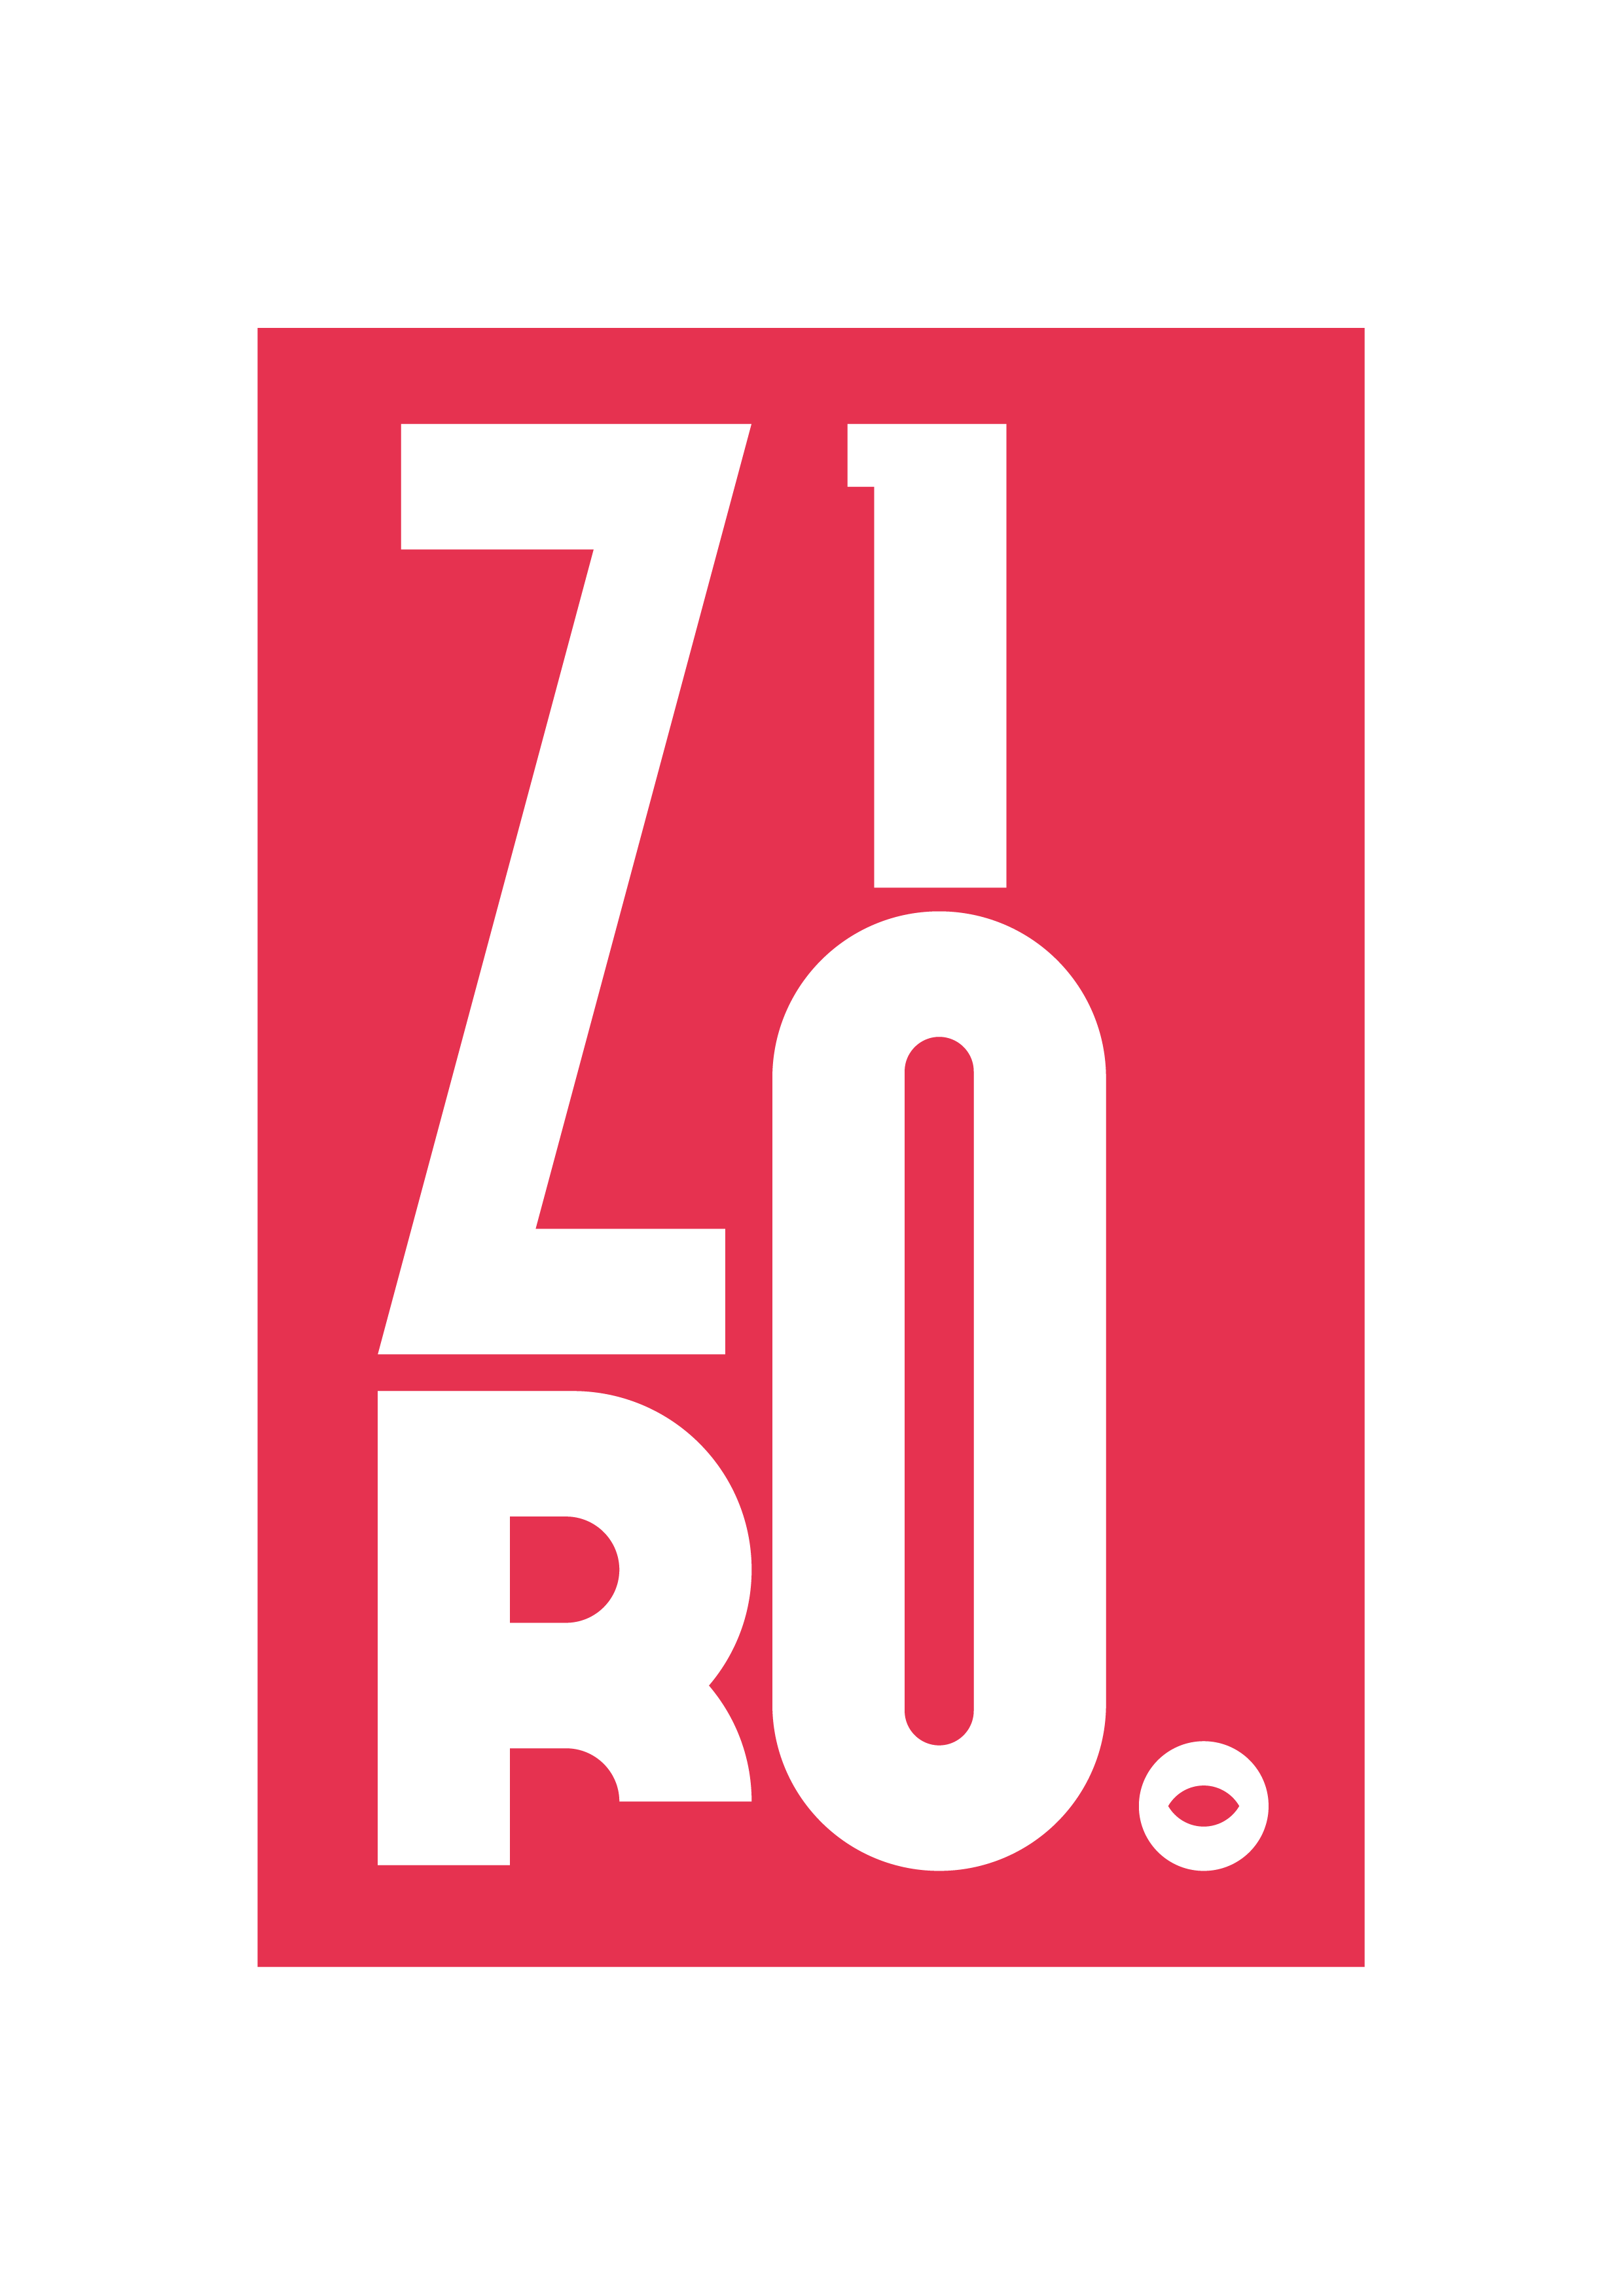 Logo del grupo de música zaragozano Ziro